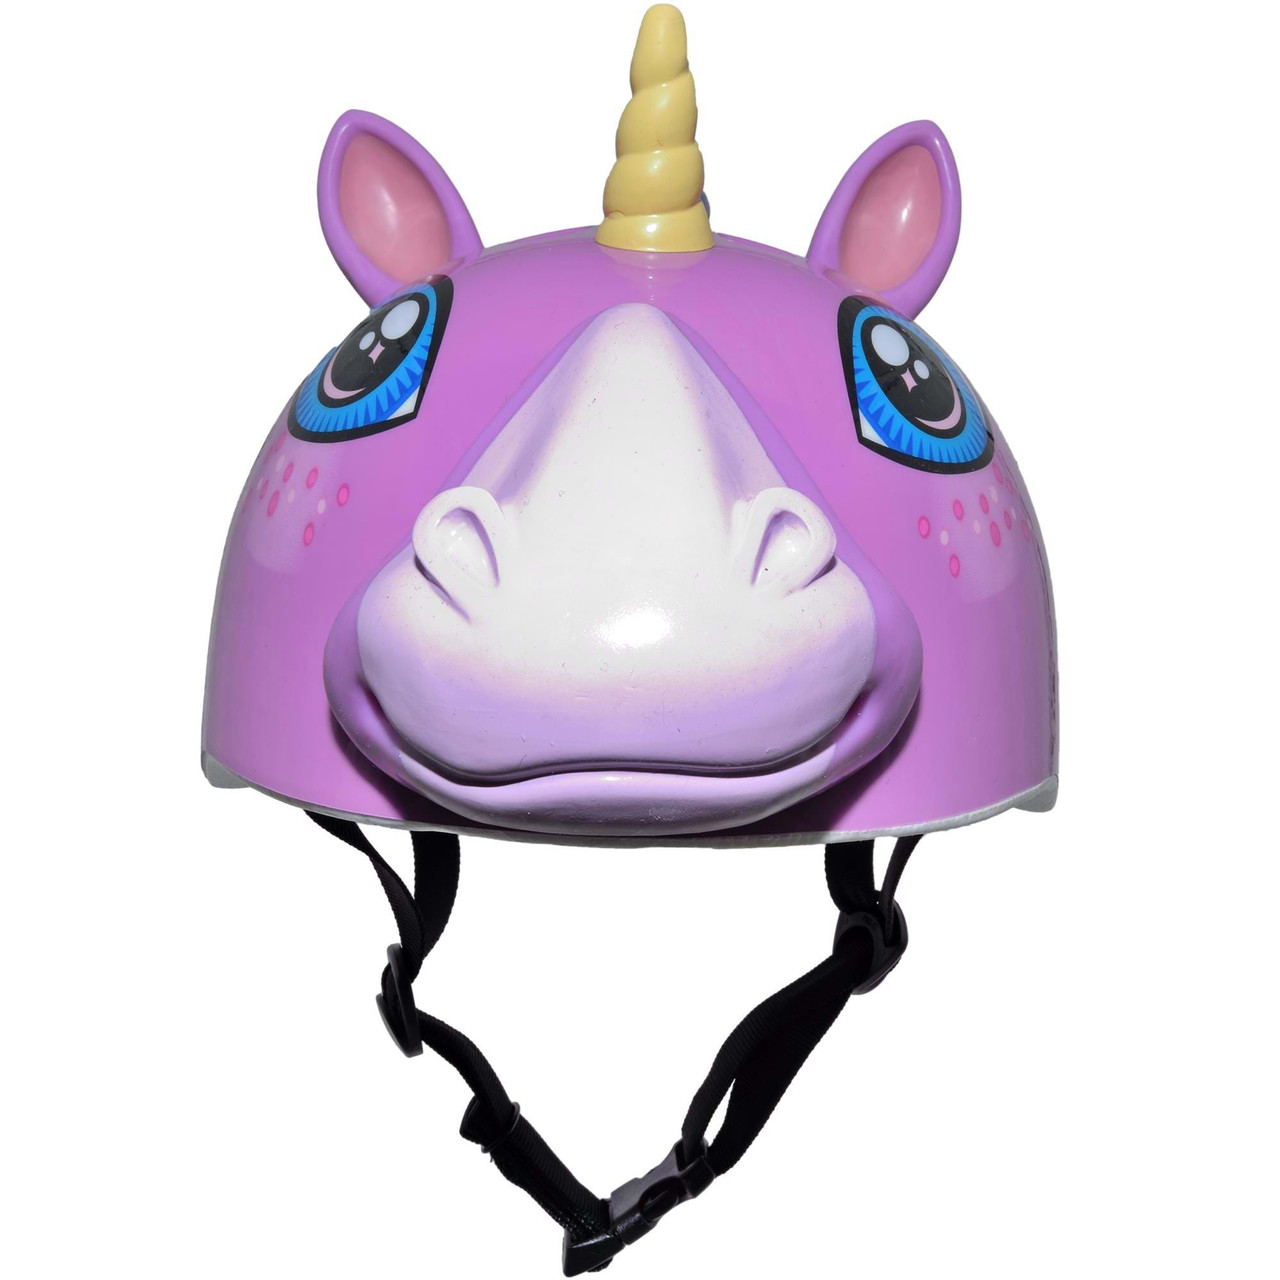 C-PREME RASKULLZ Toddler Helmet 3+ Years Pink Unicorn Style Size 48-52cm